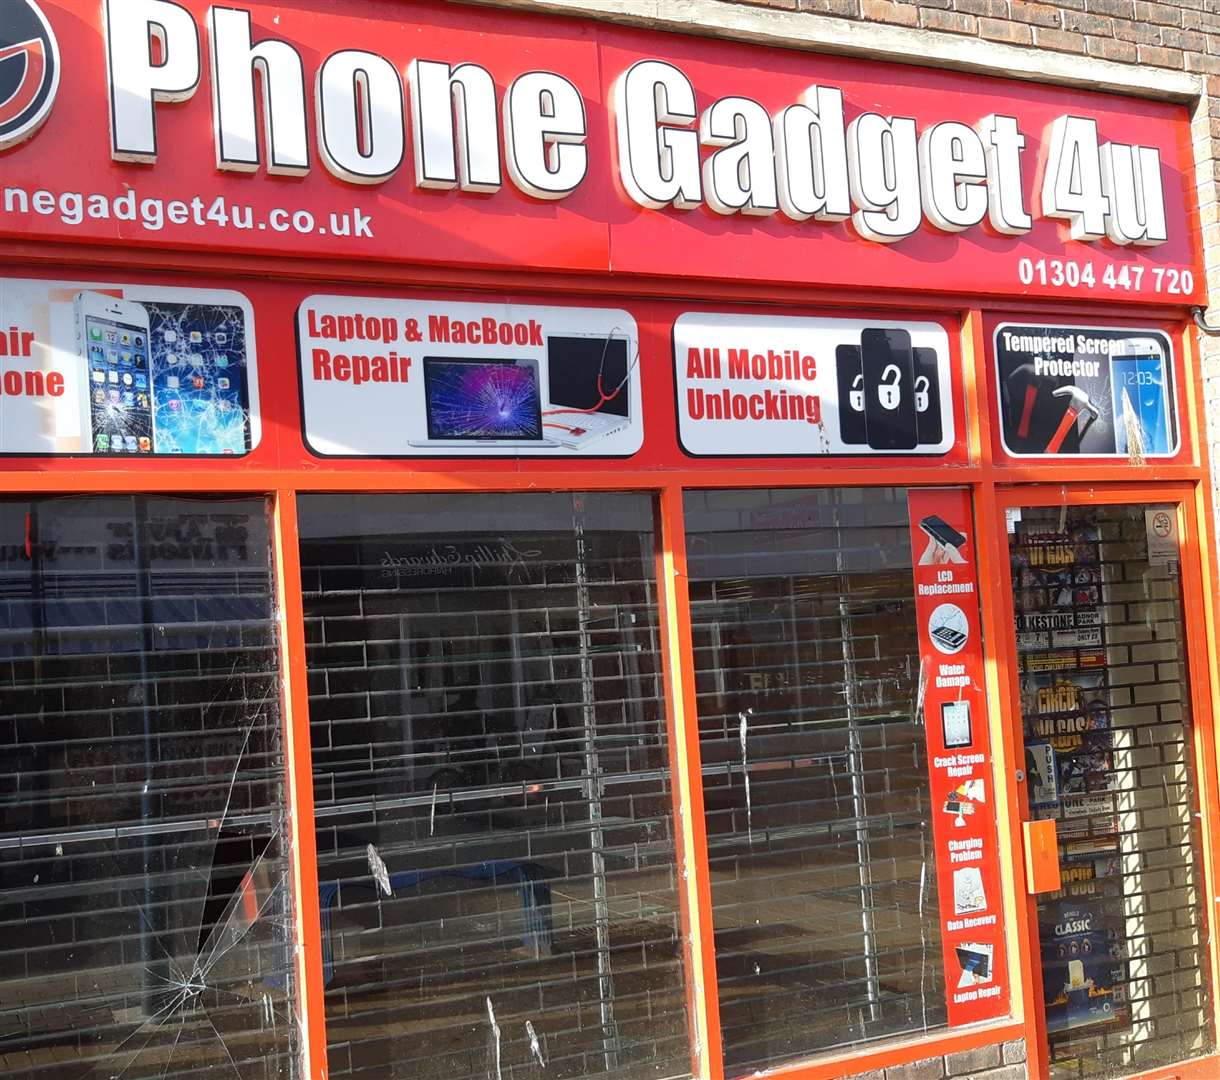 This empty mobile phone store in Biggin Street, opposite Taylor Meats, even has a broken window